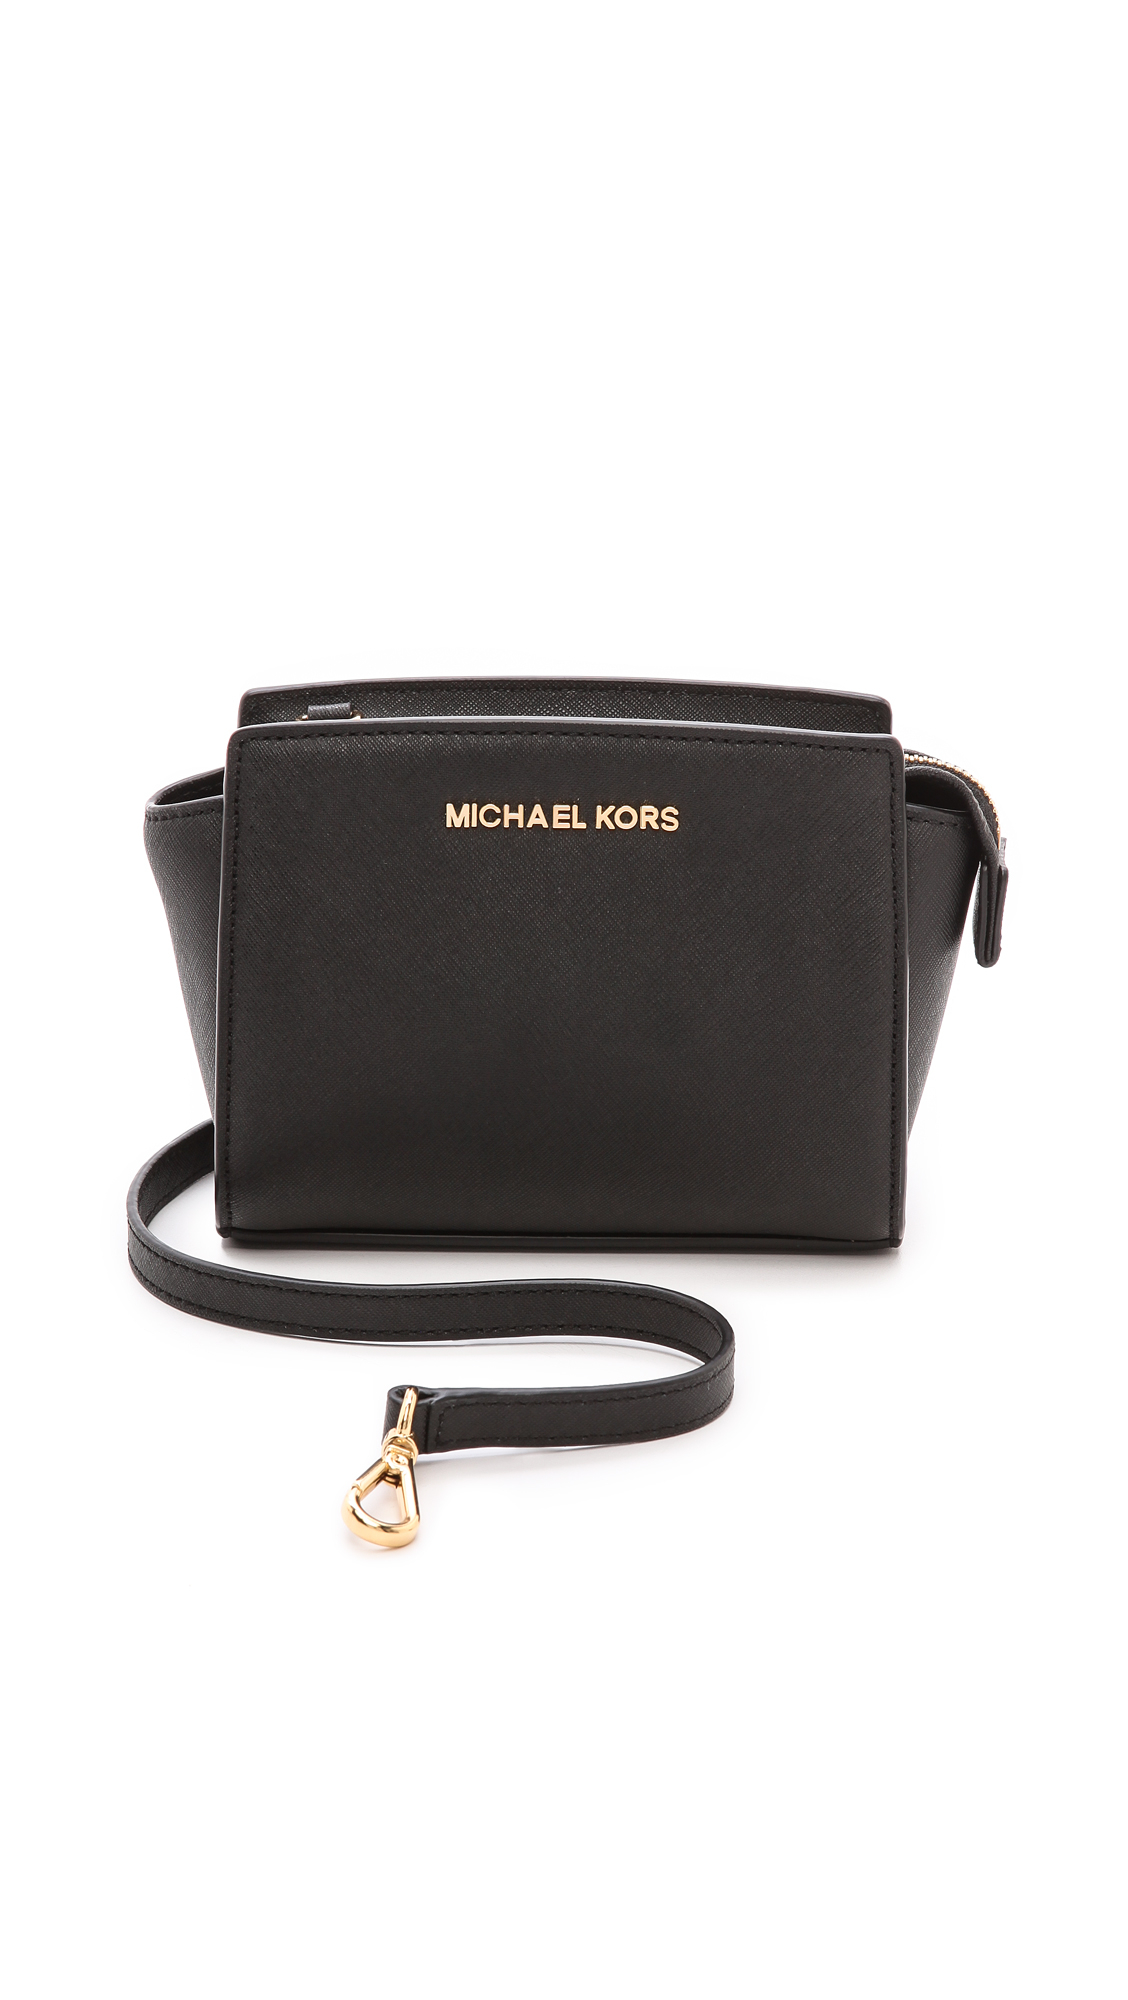 Lyst - MICHAEL Michael Kors Selma Mini Messenger Bag Luggage in Black